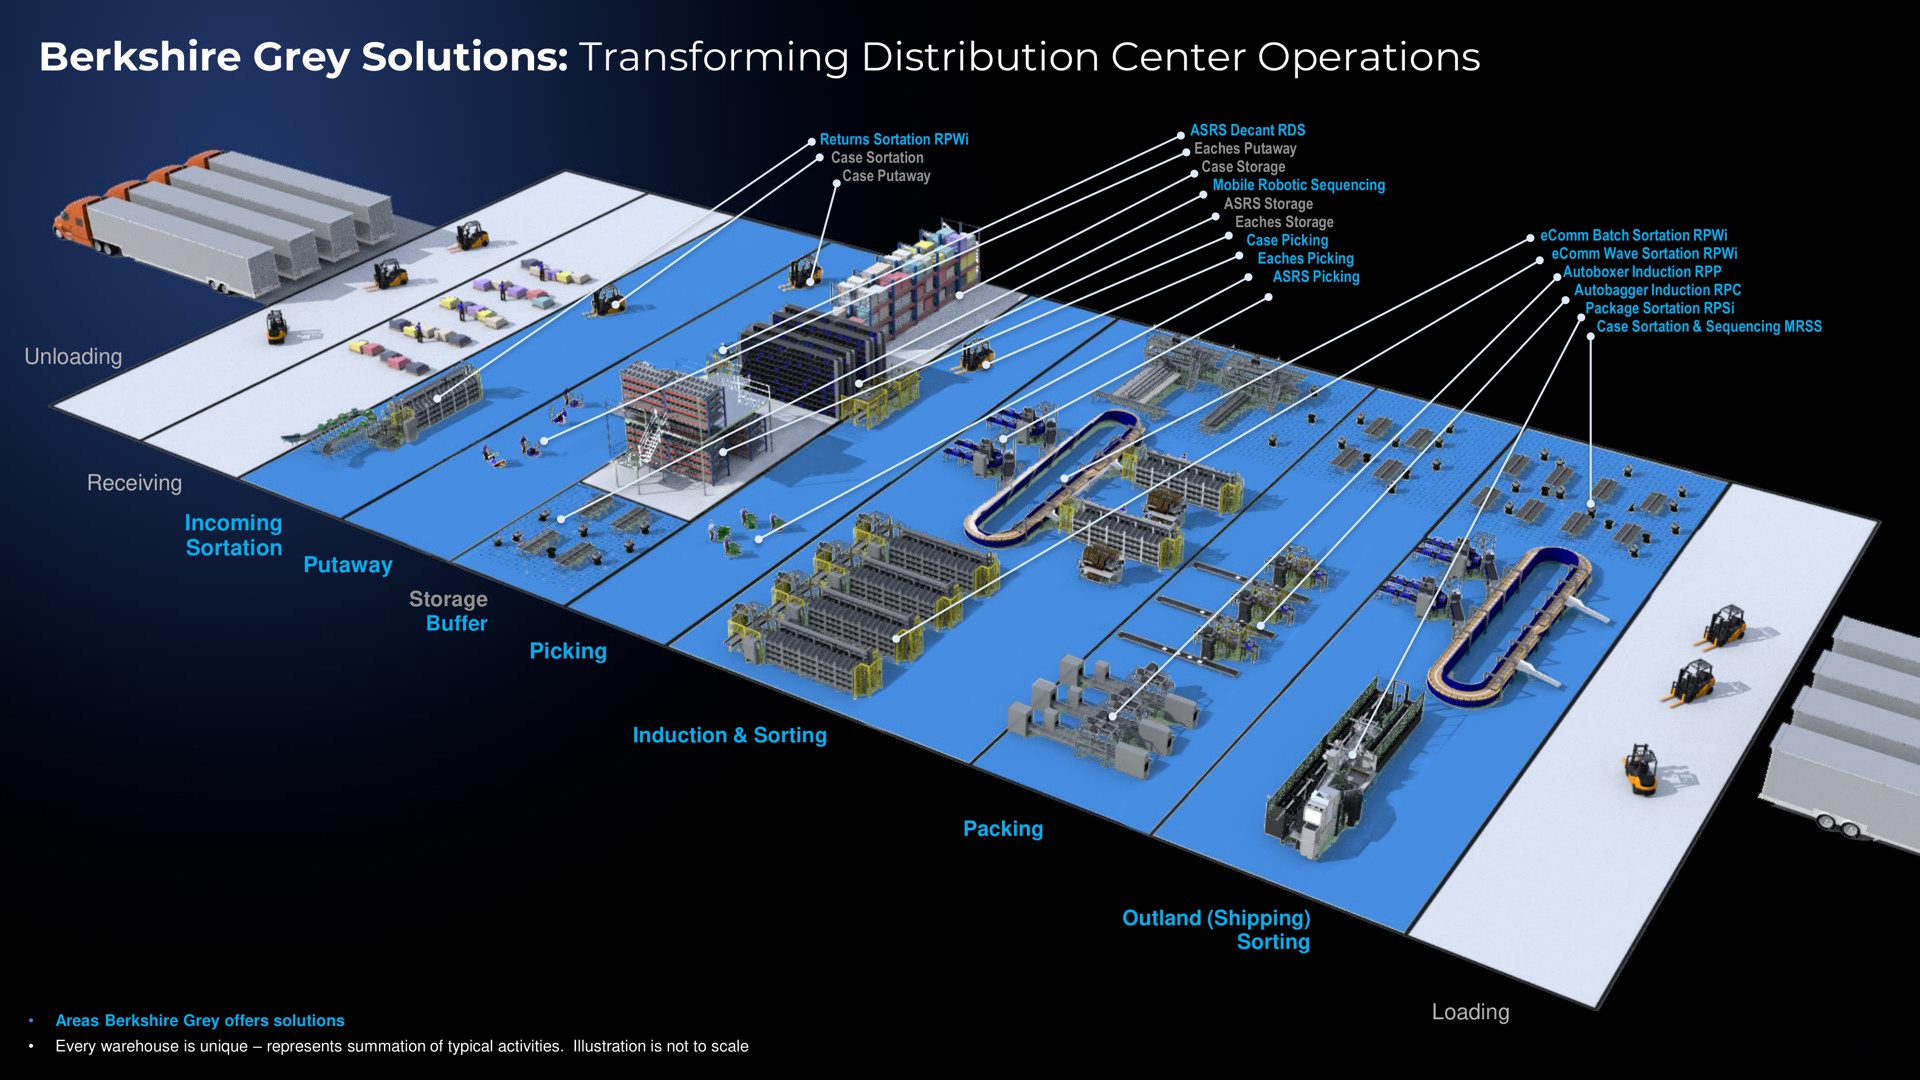 grey solutions transforming distribution center operations | Berkshire Grey